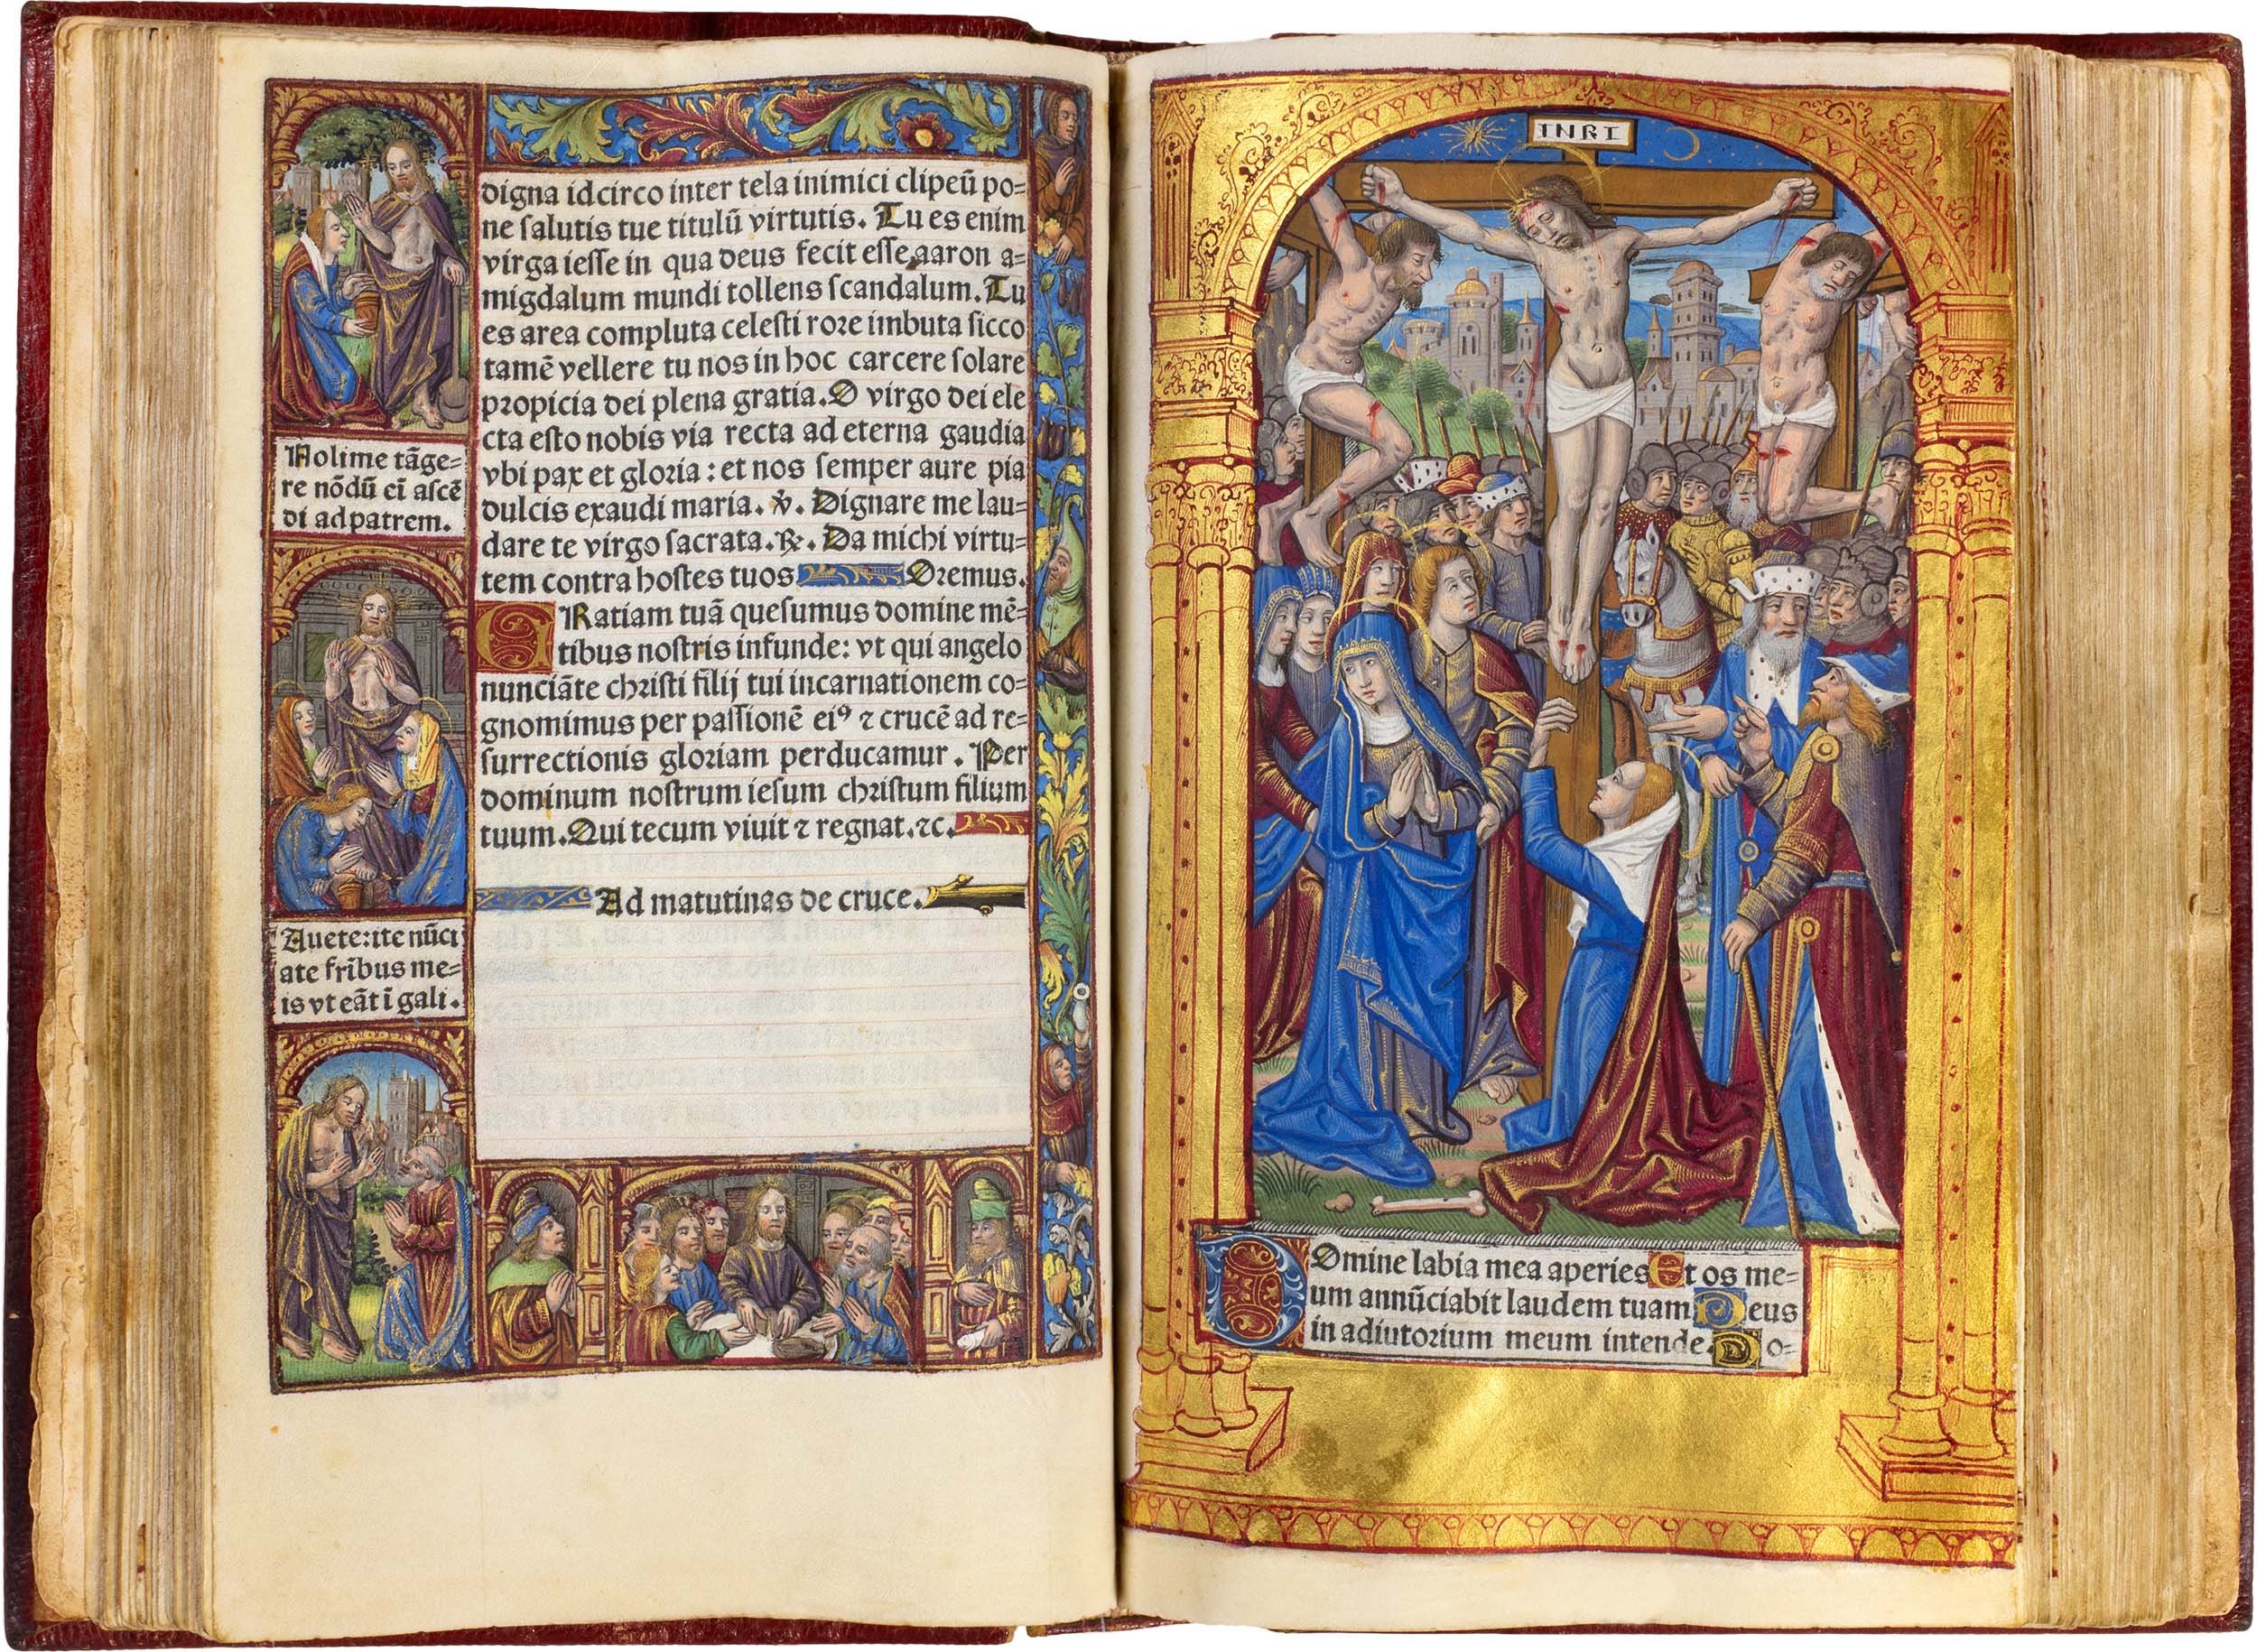 Horae-bmv-book-of-hours-Louis-XII-martainville-master-philippa-guelders-paris-pigouchet-vostre-15.10.1499-32.jpg